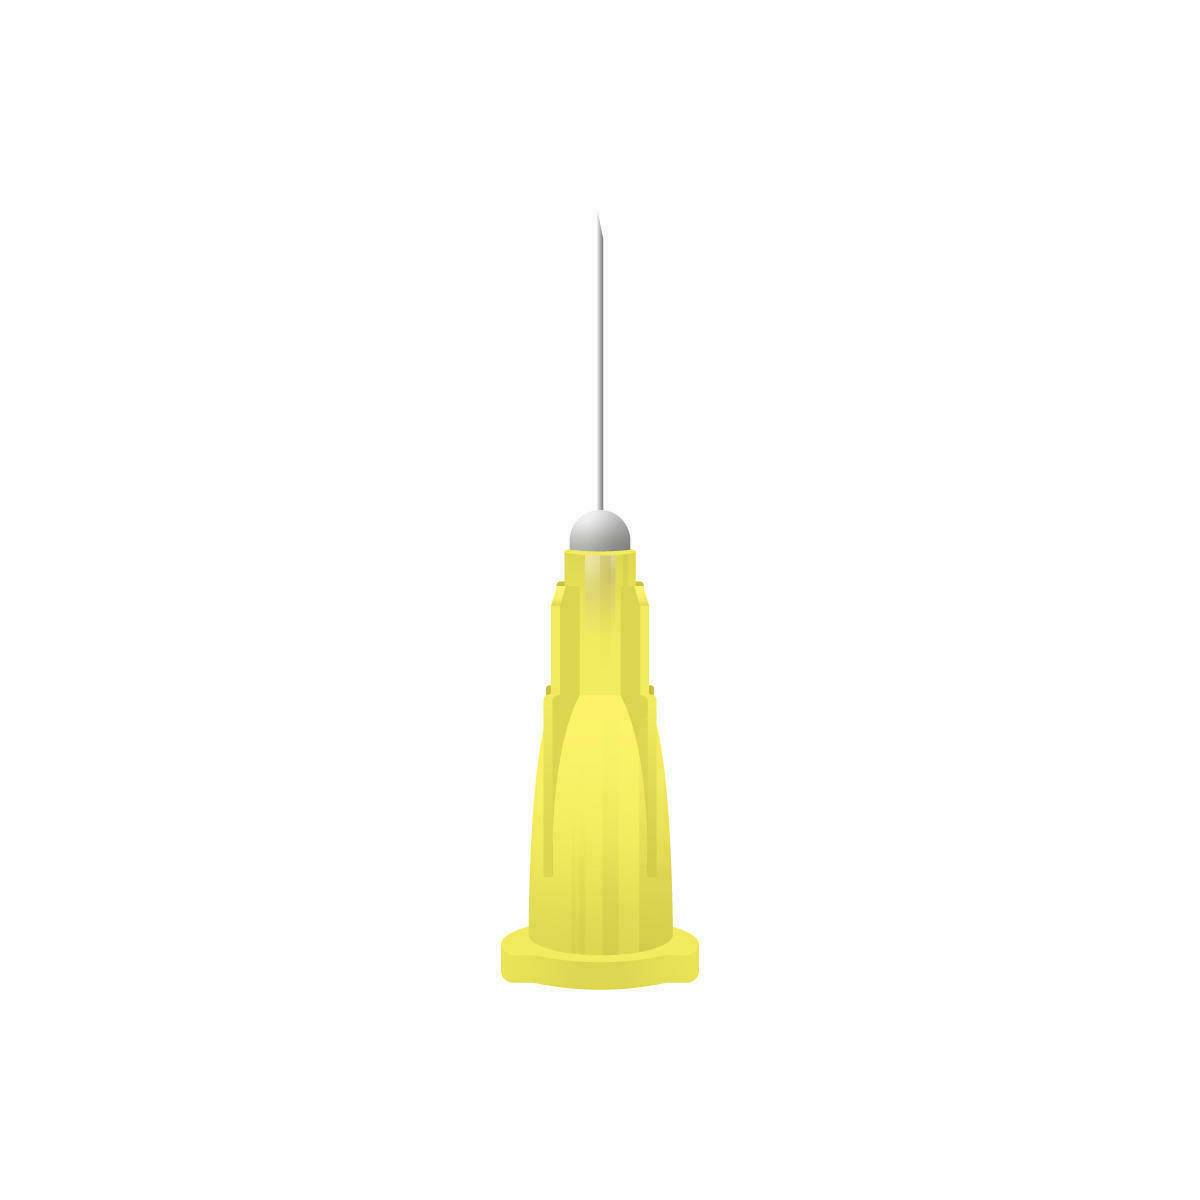 30g Yellow 0.5 inch Sol-M Needles - UKMEDI